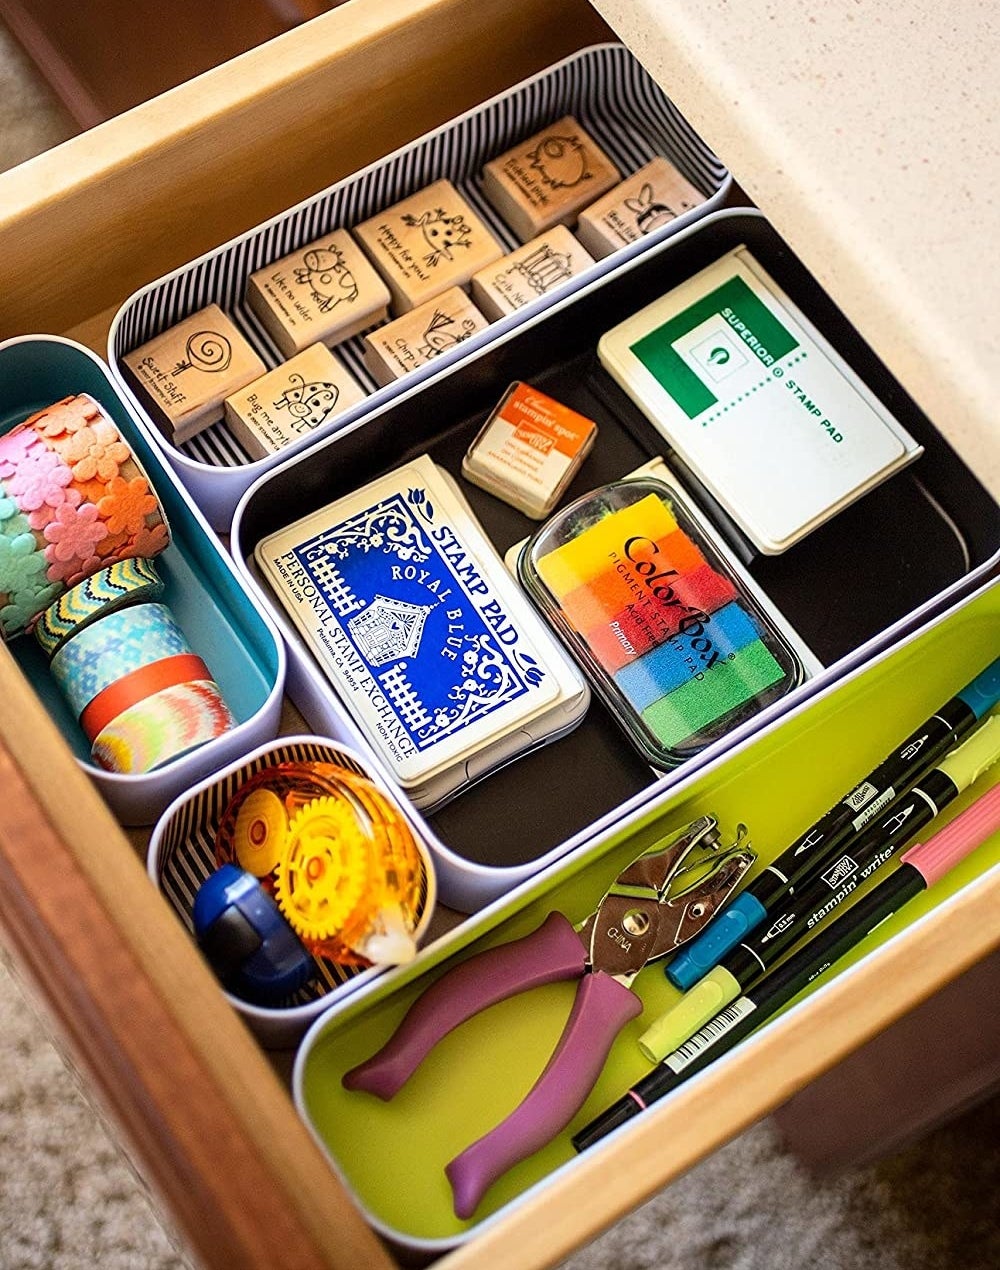 An open drawer with interlocking organizers inside